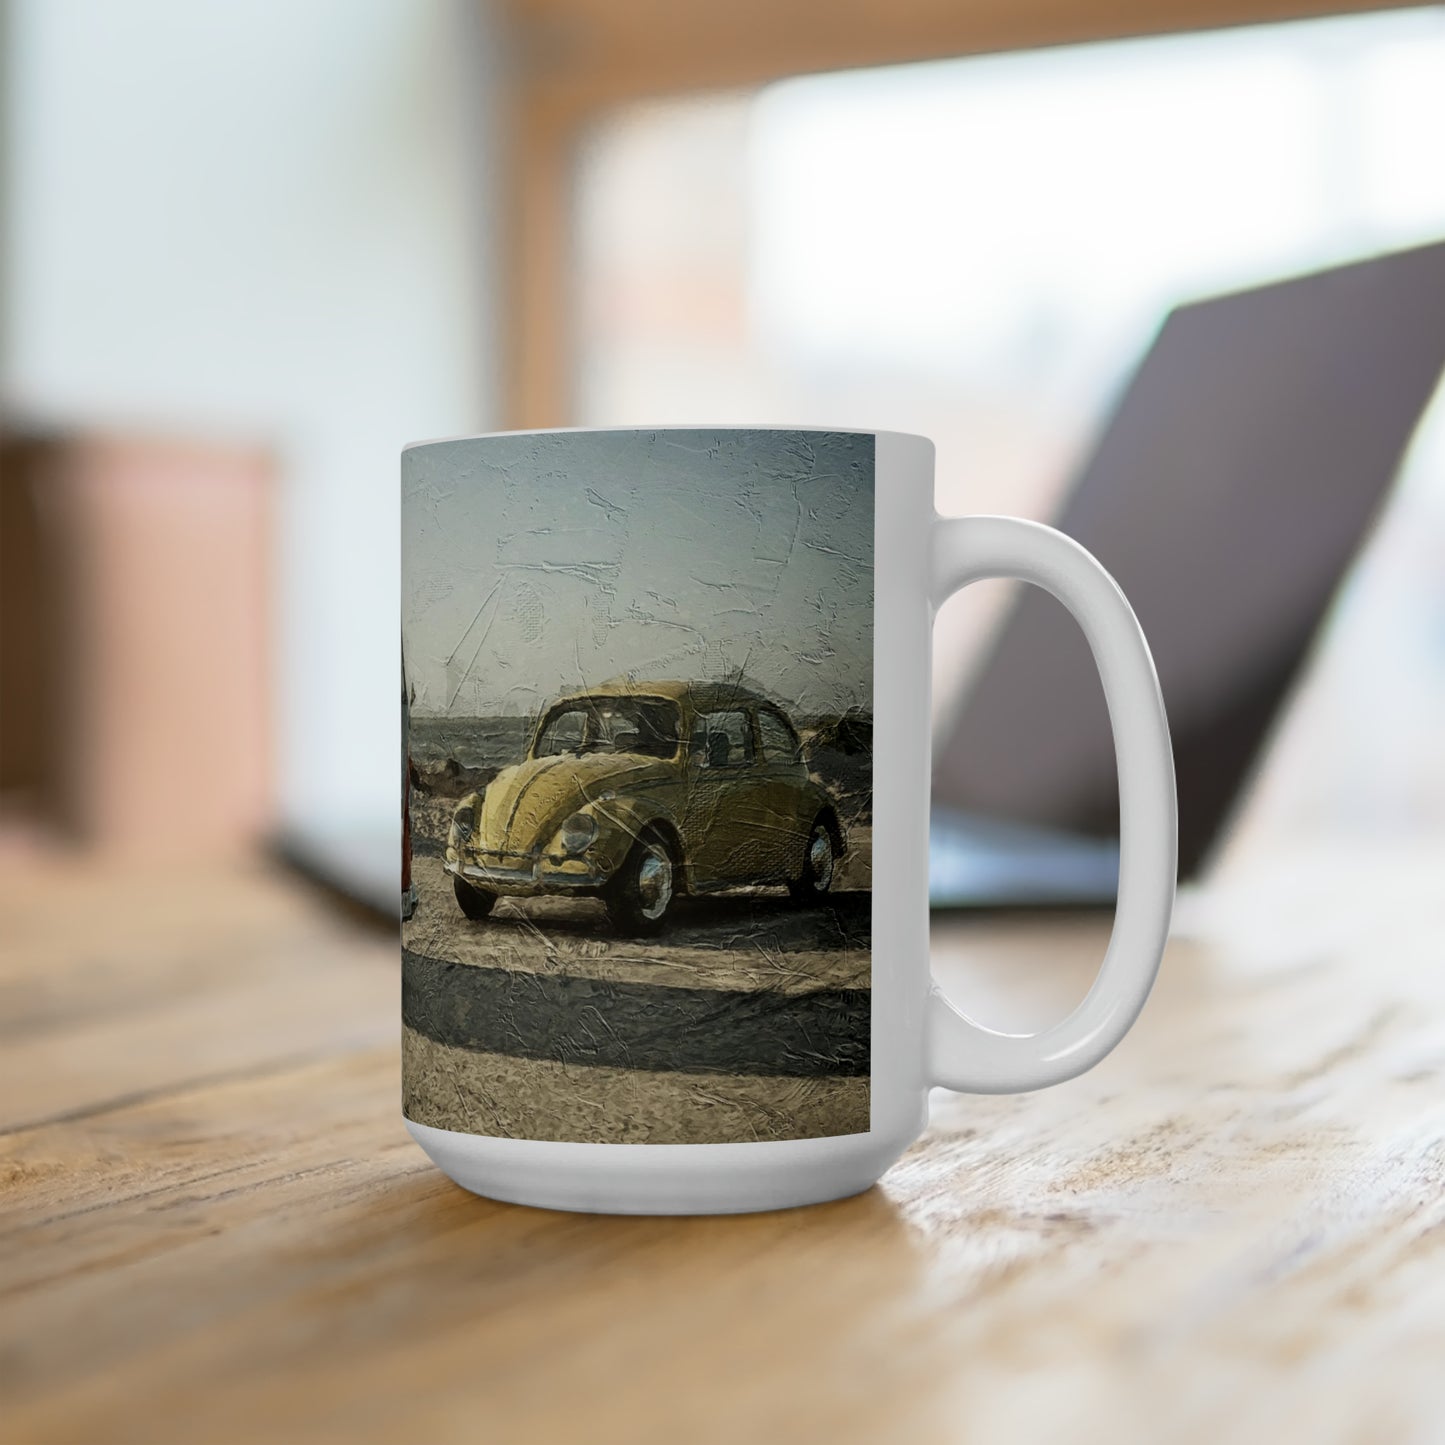 For the Volkswagen lover -  VW Bus and Bug Ceramic Mug 15oz